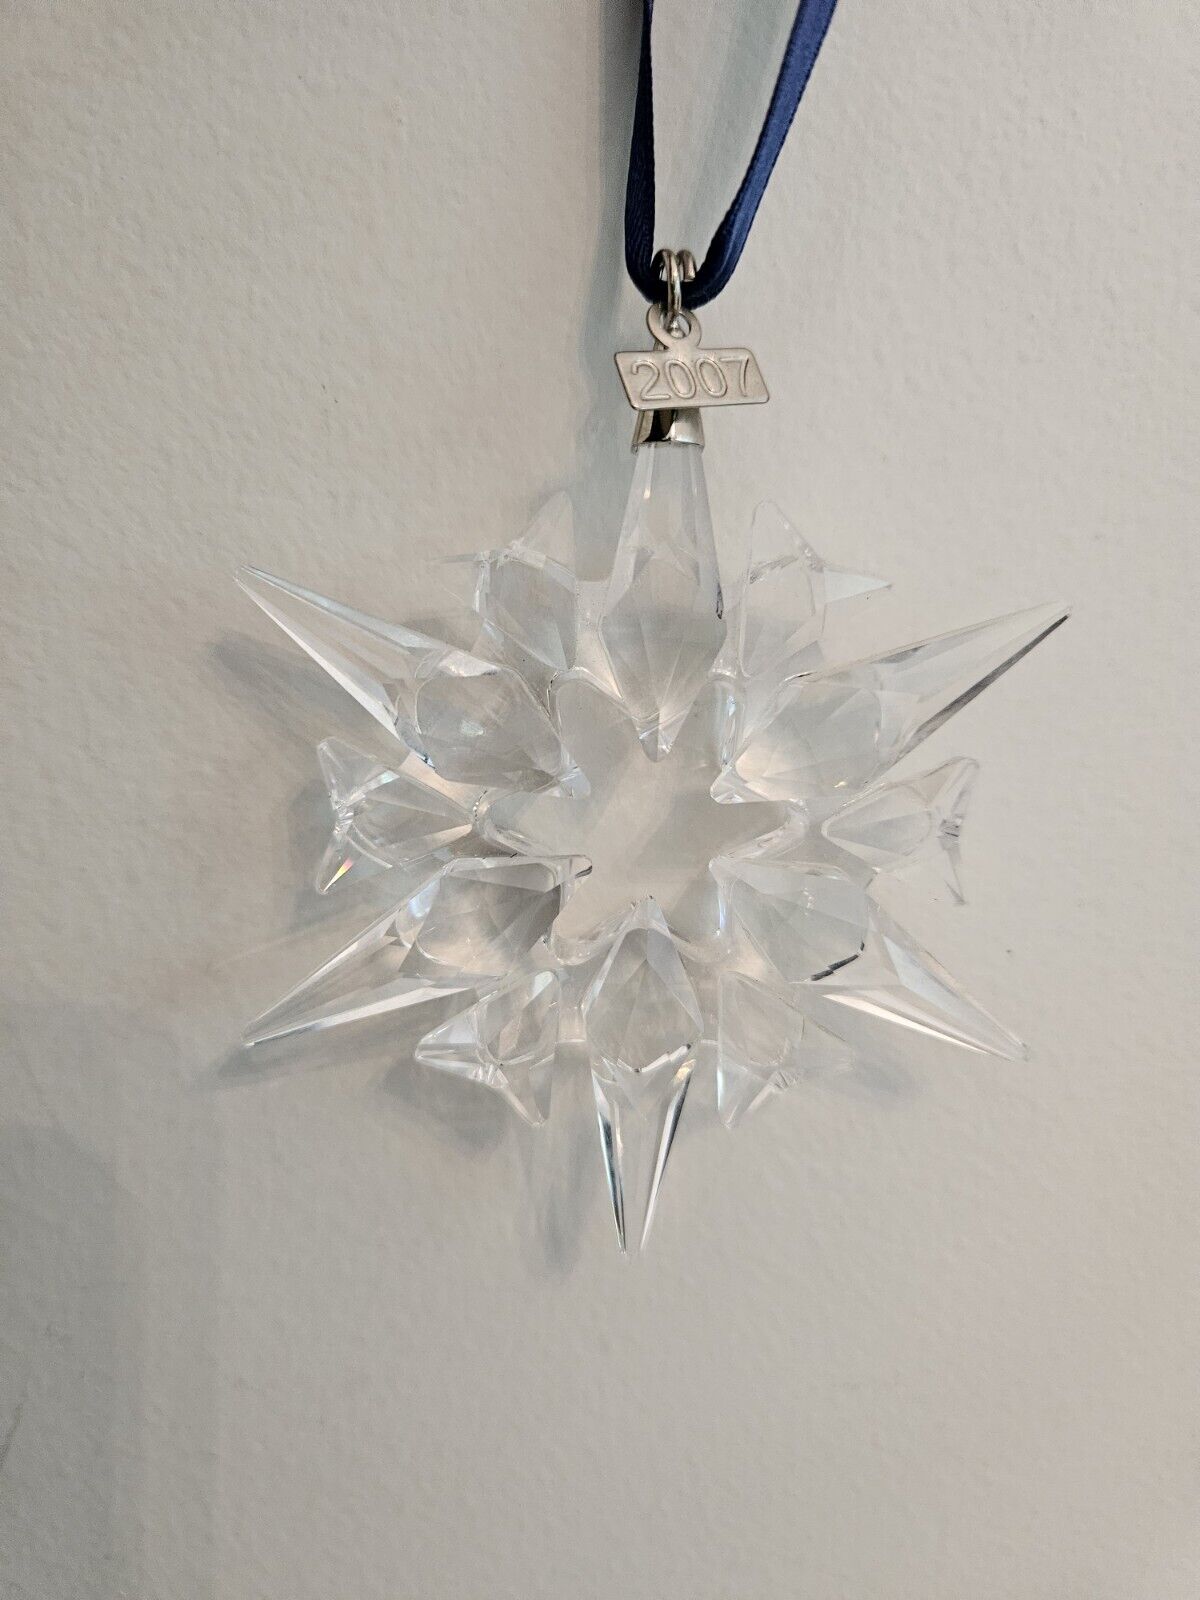 2007 Swarovski Large Annual Crystal Snowflake Christmas Ornament